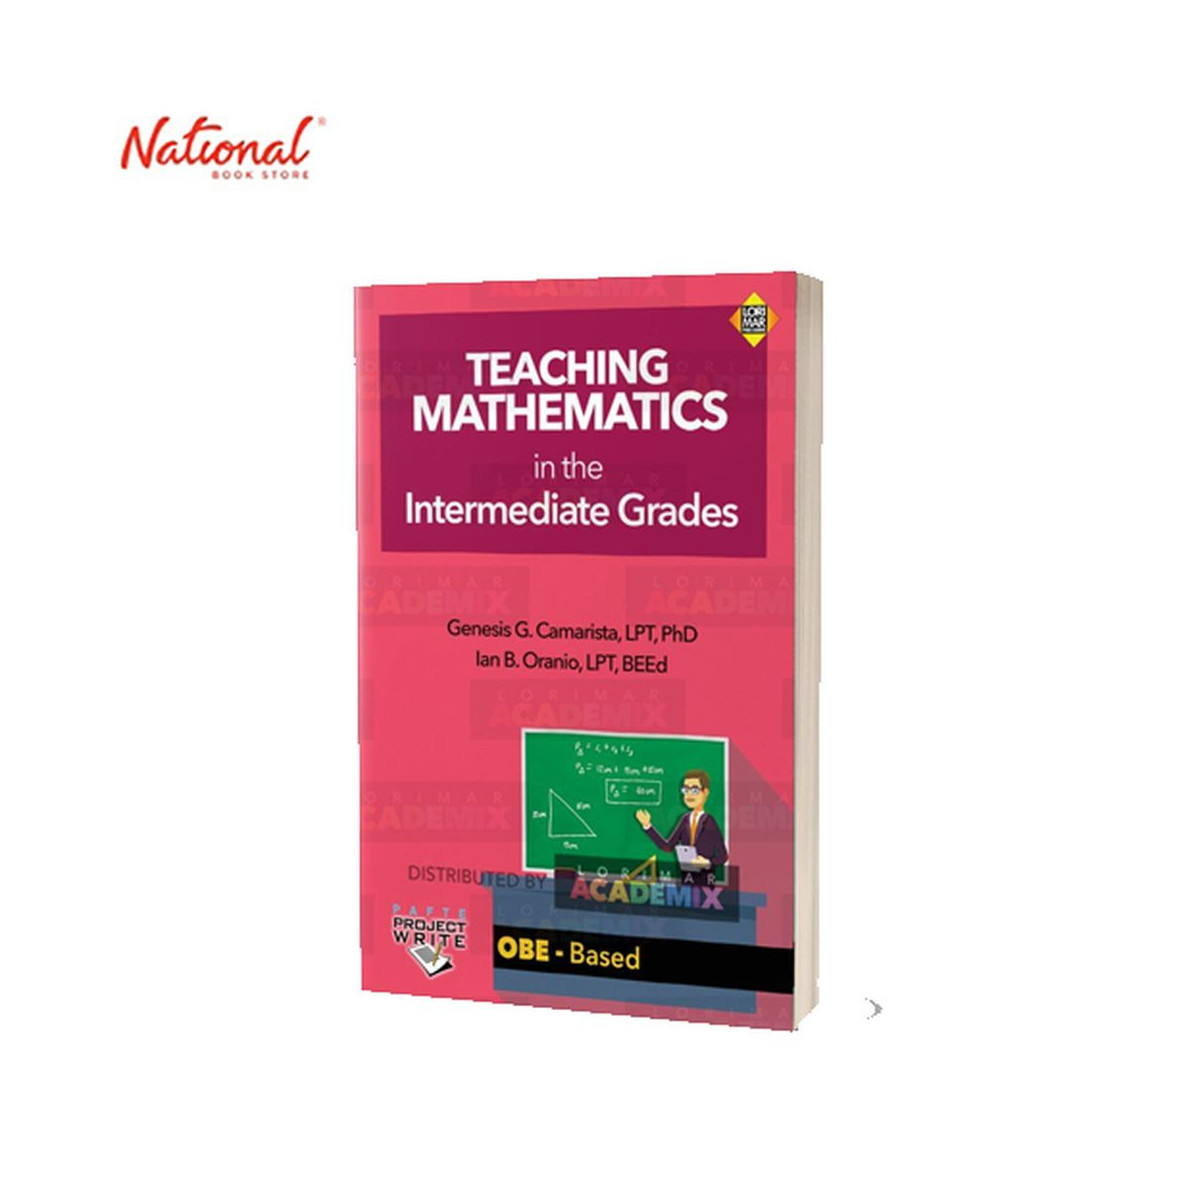 Teaching Mathematics In The Intermediate Grades Trade Paperback by Genesis G. Camarista